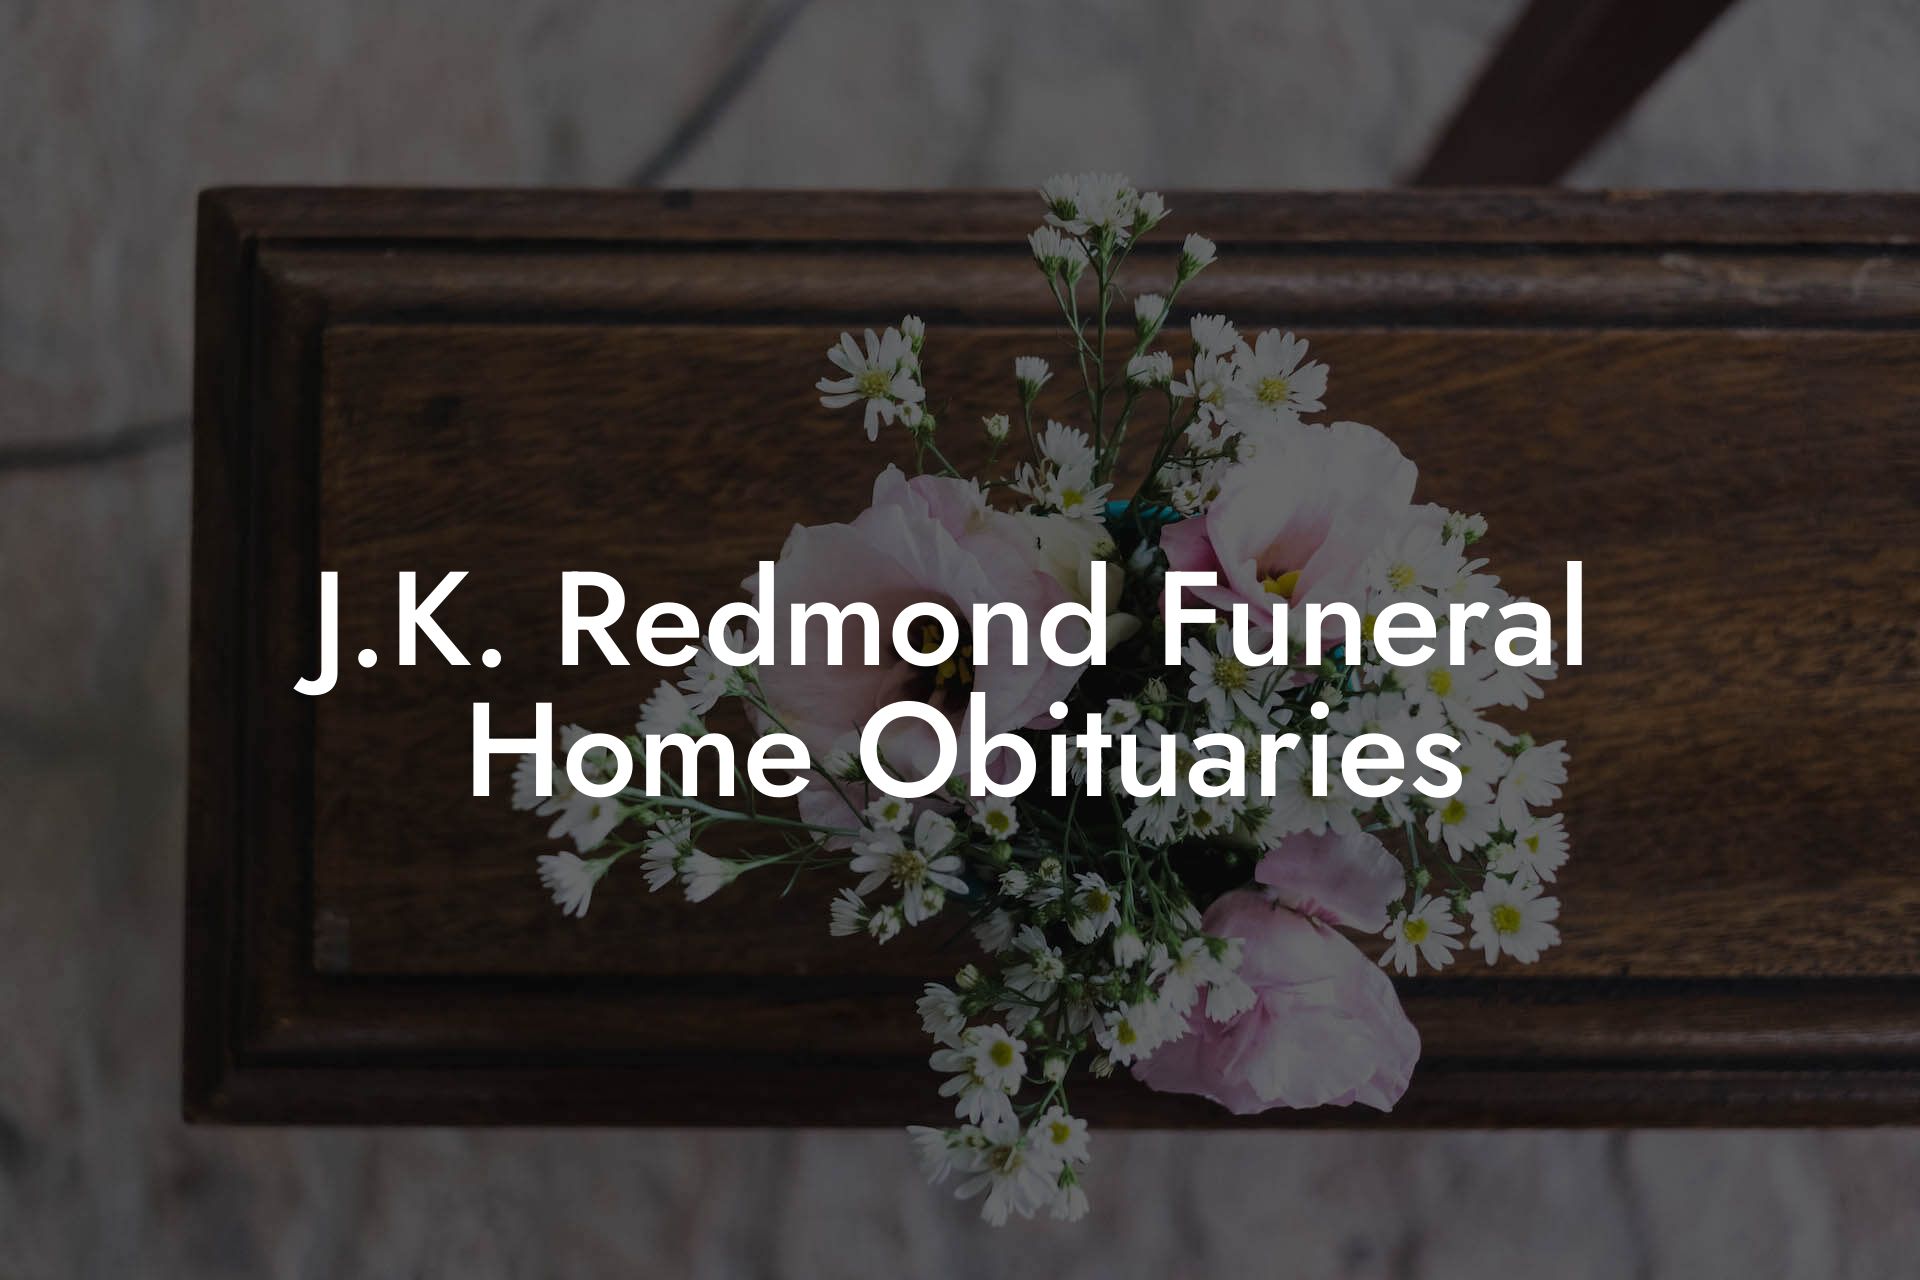 J.K. Redmond Funeral Home Obituaries